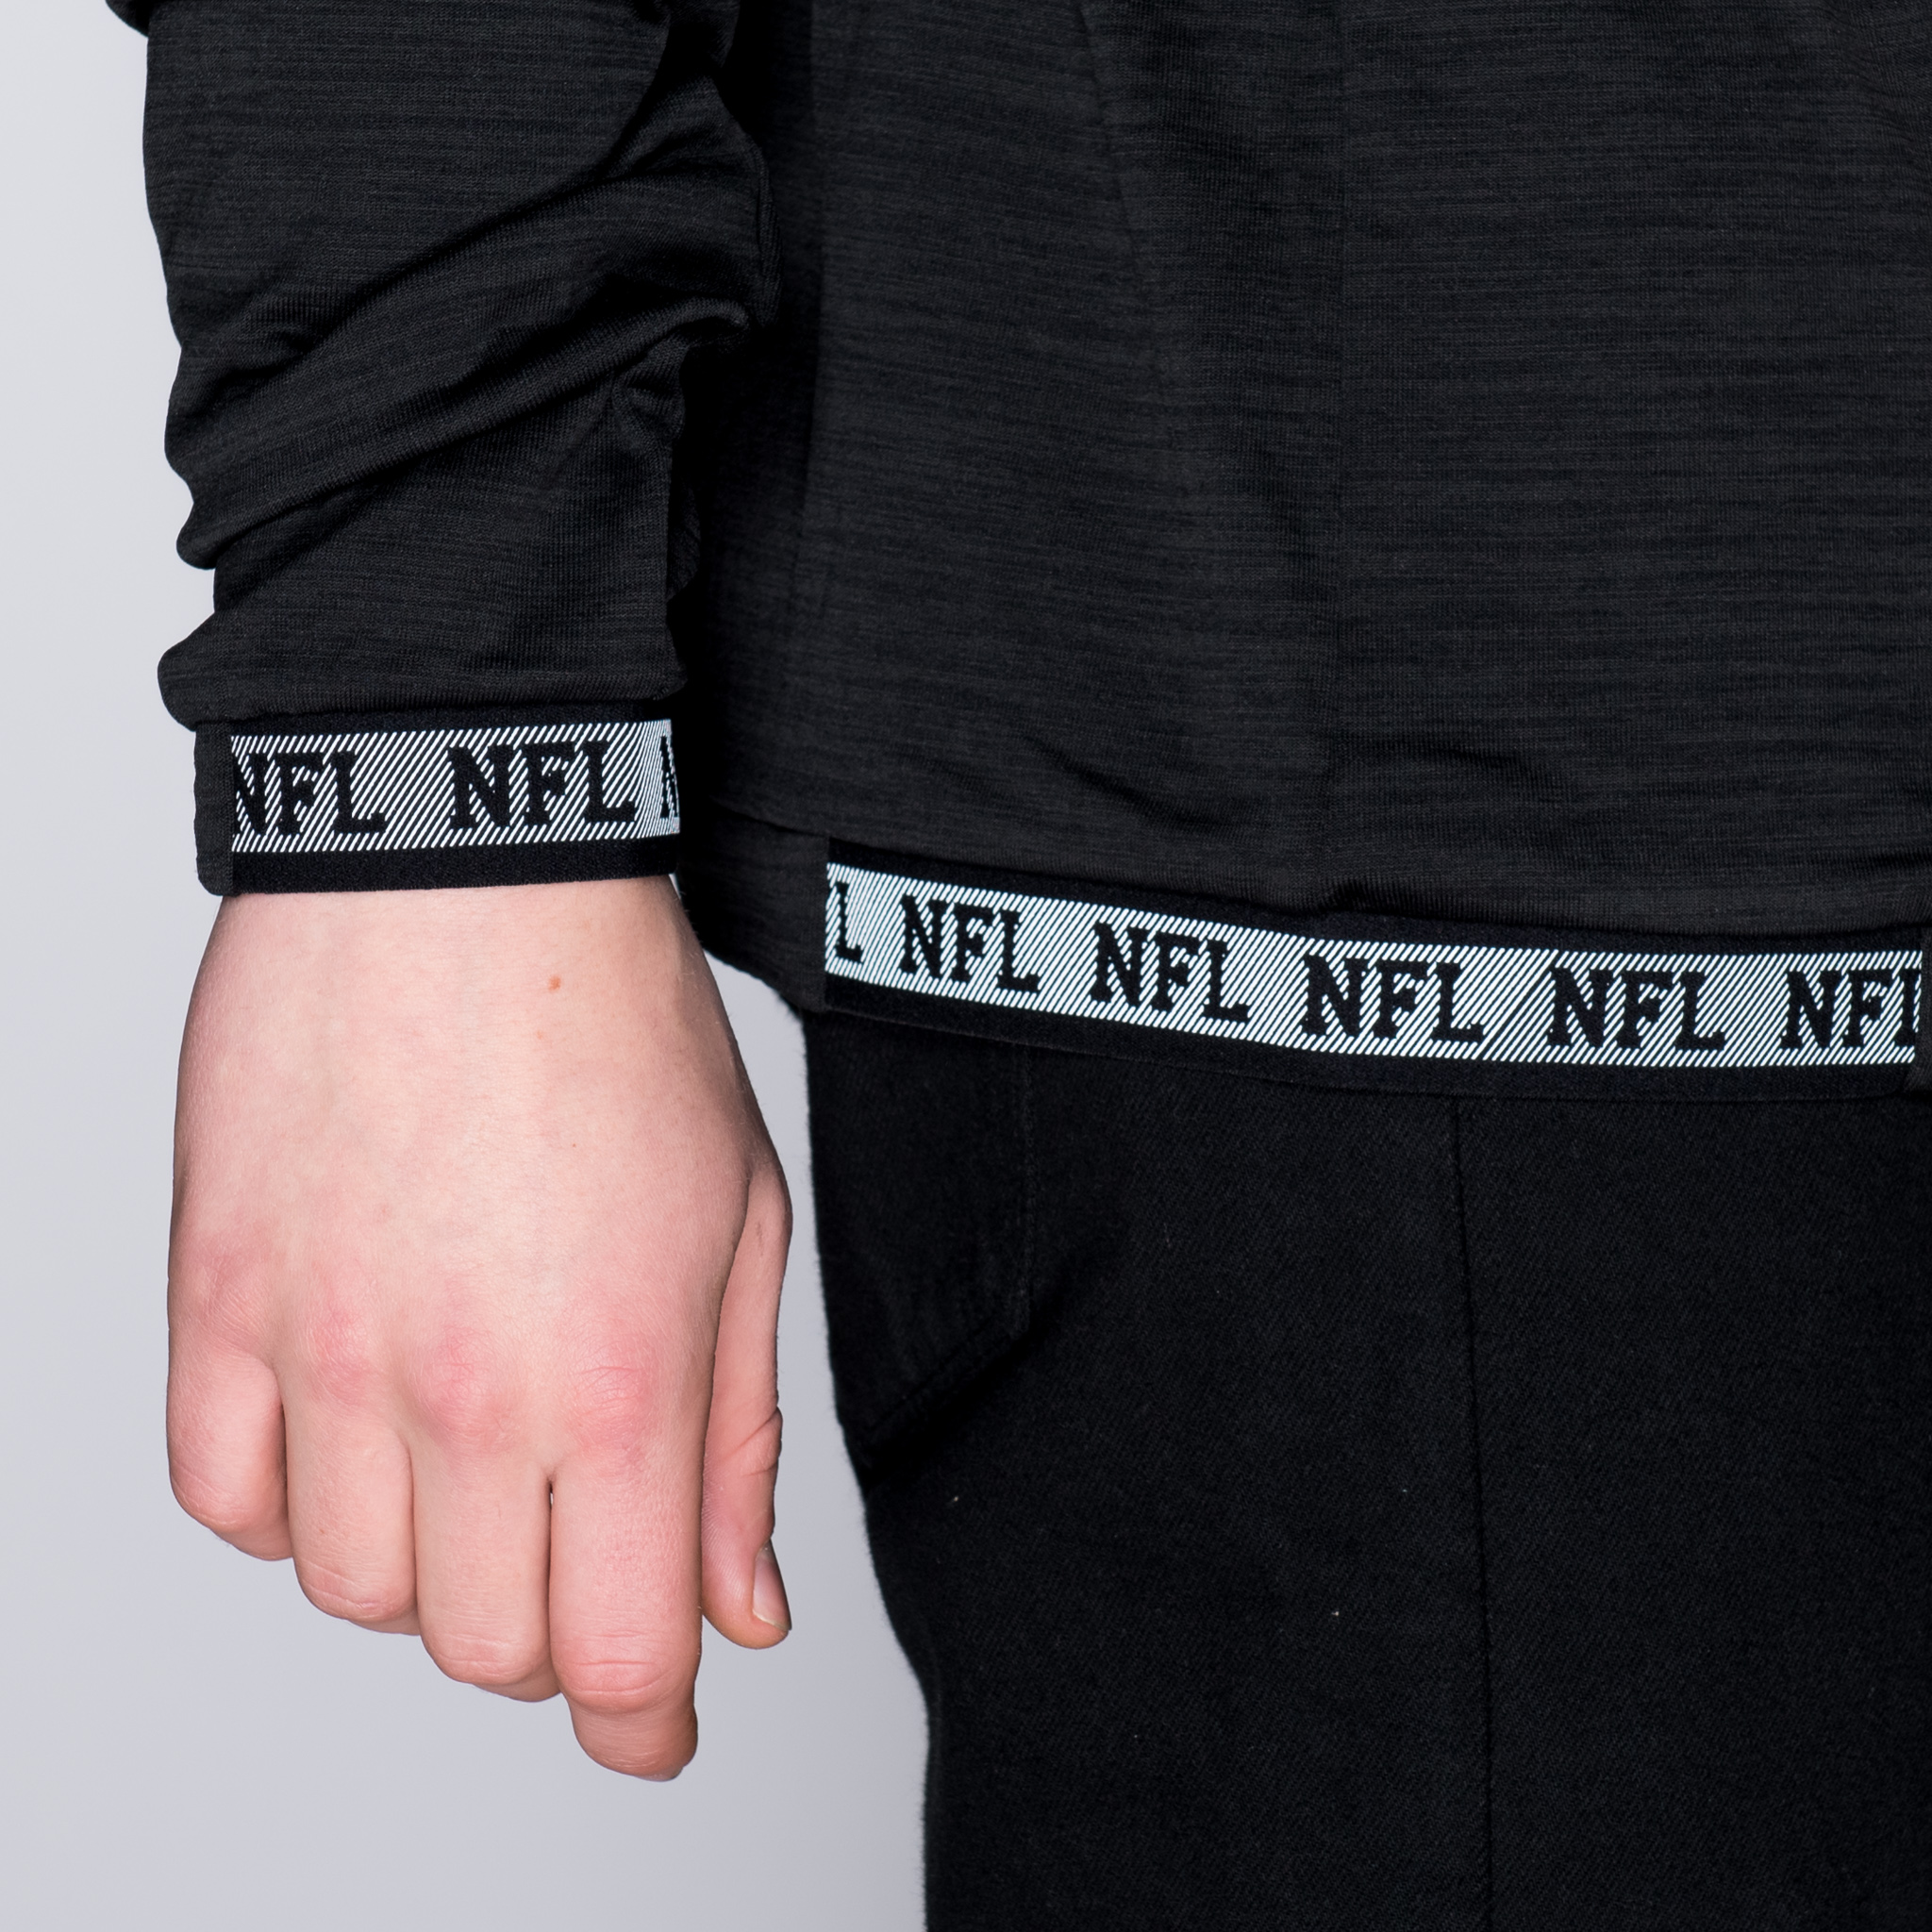 Camiseta de manga larga NFL 
Logo Engineered